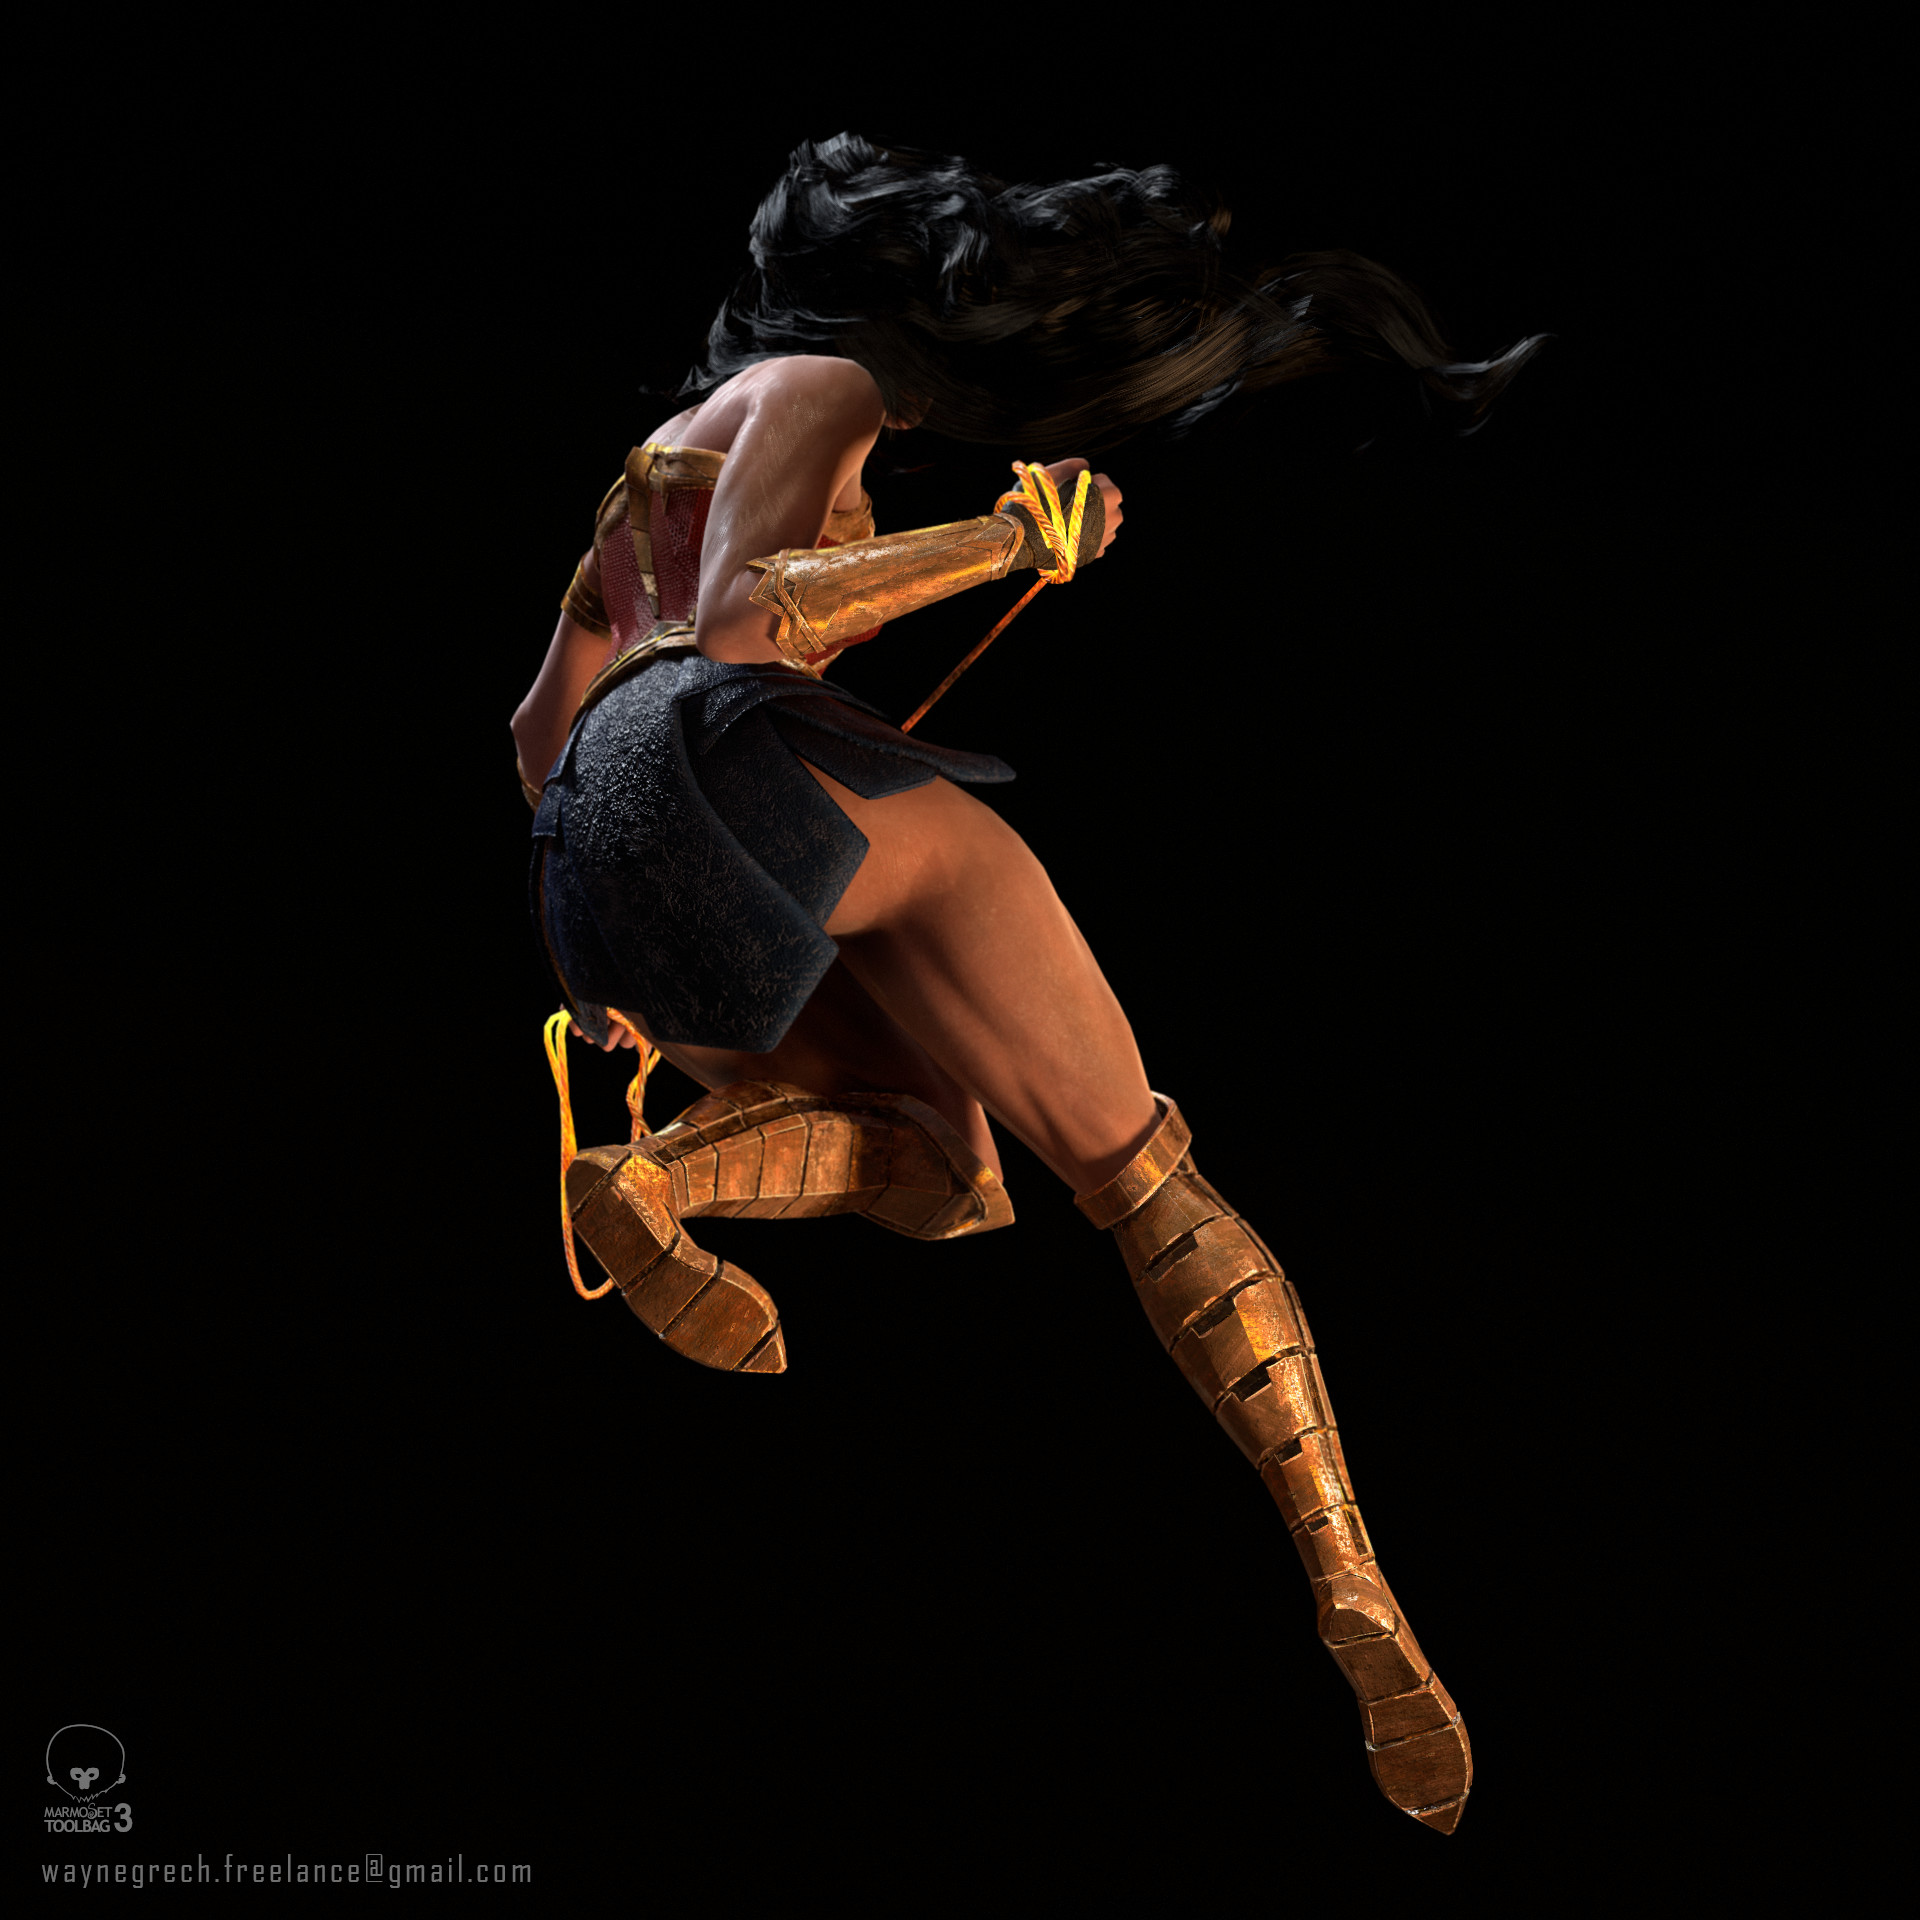 Wayne Grech - Wonder Woman Game Character